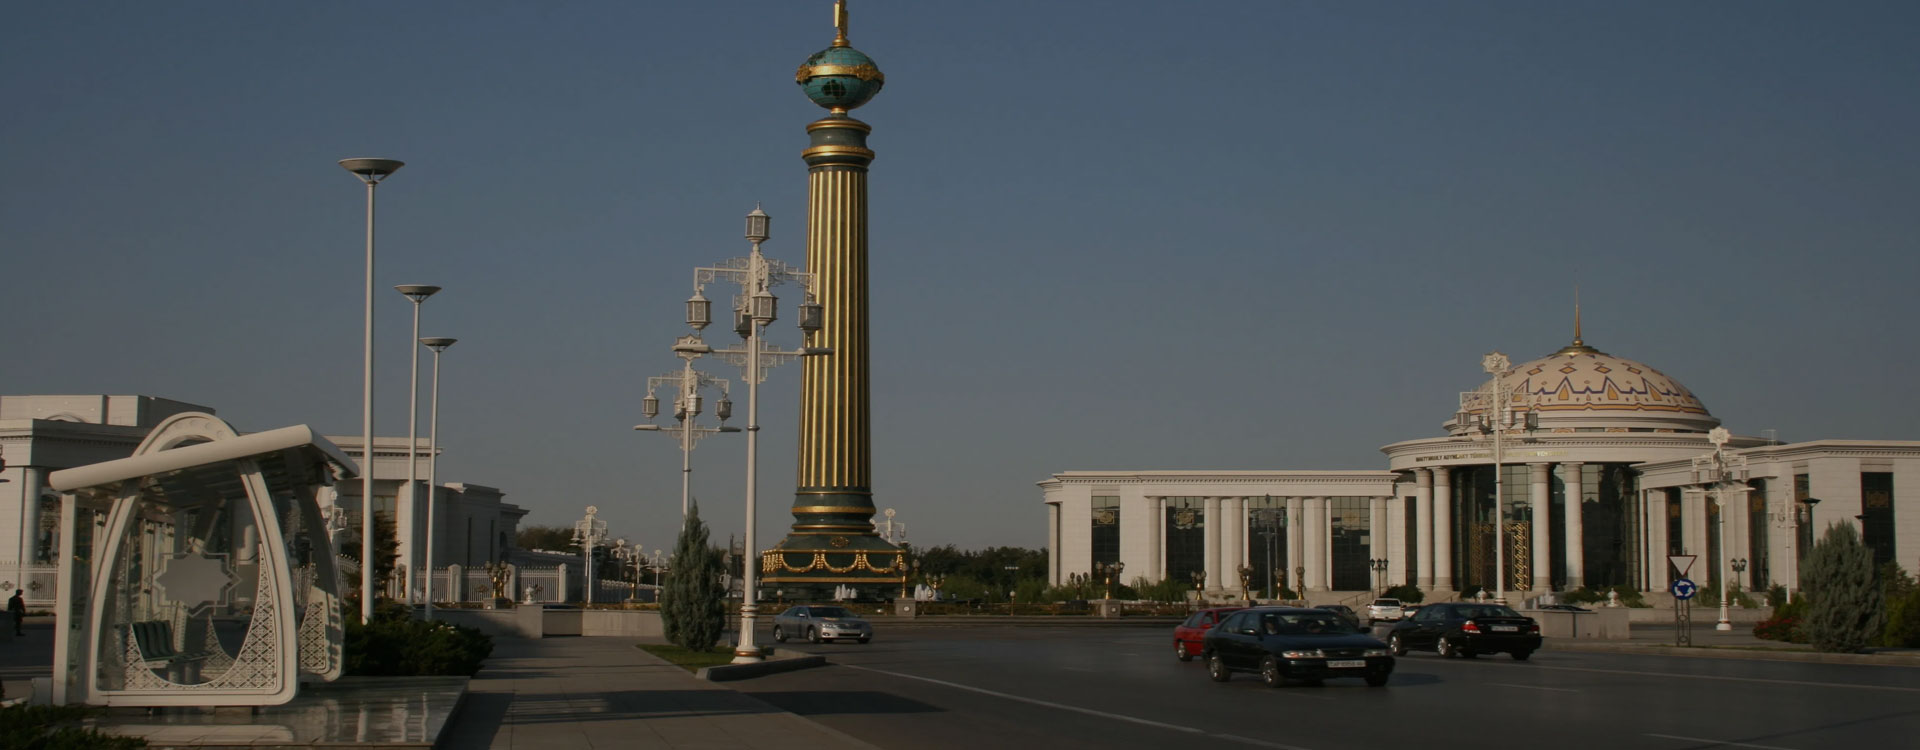 Turkmenistan Visa